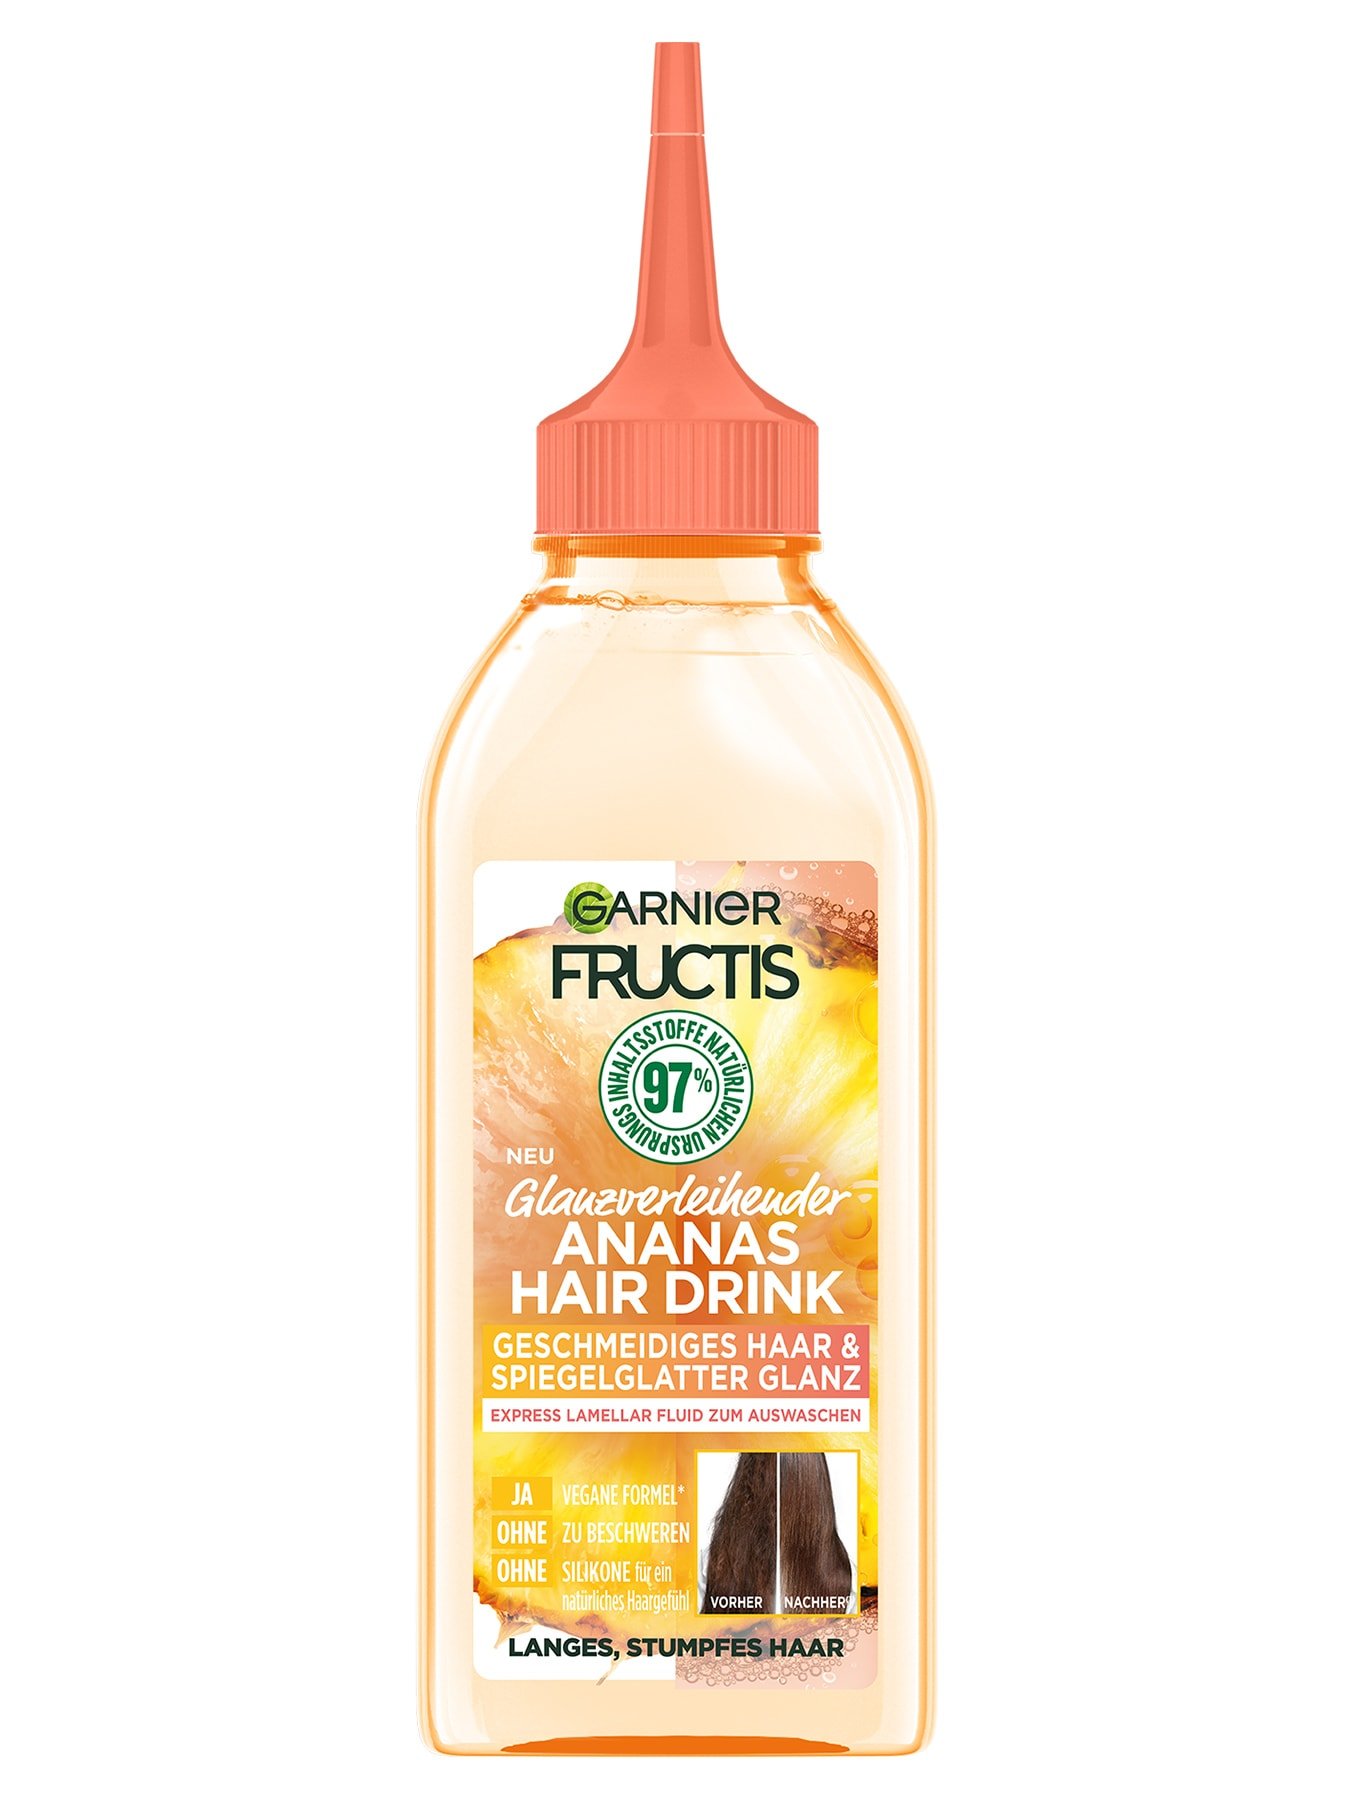 Fructis Ananas Haarfluid für langes, stumpfes Haar Produktbild